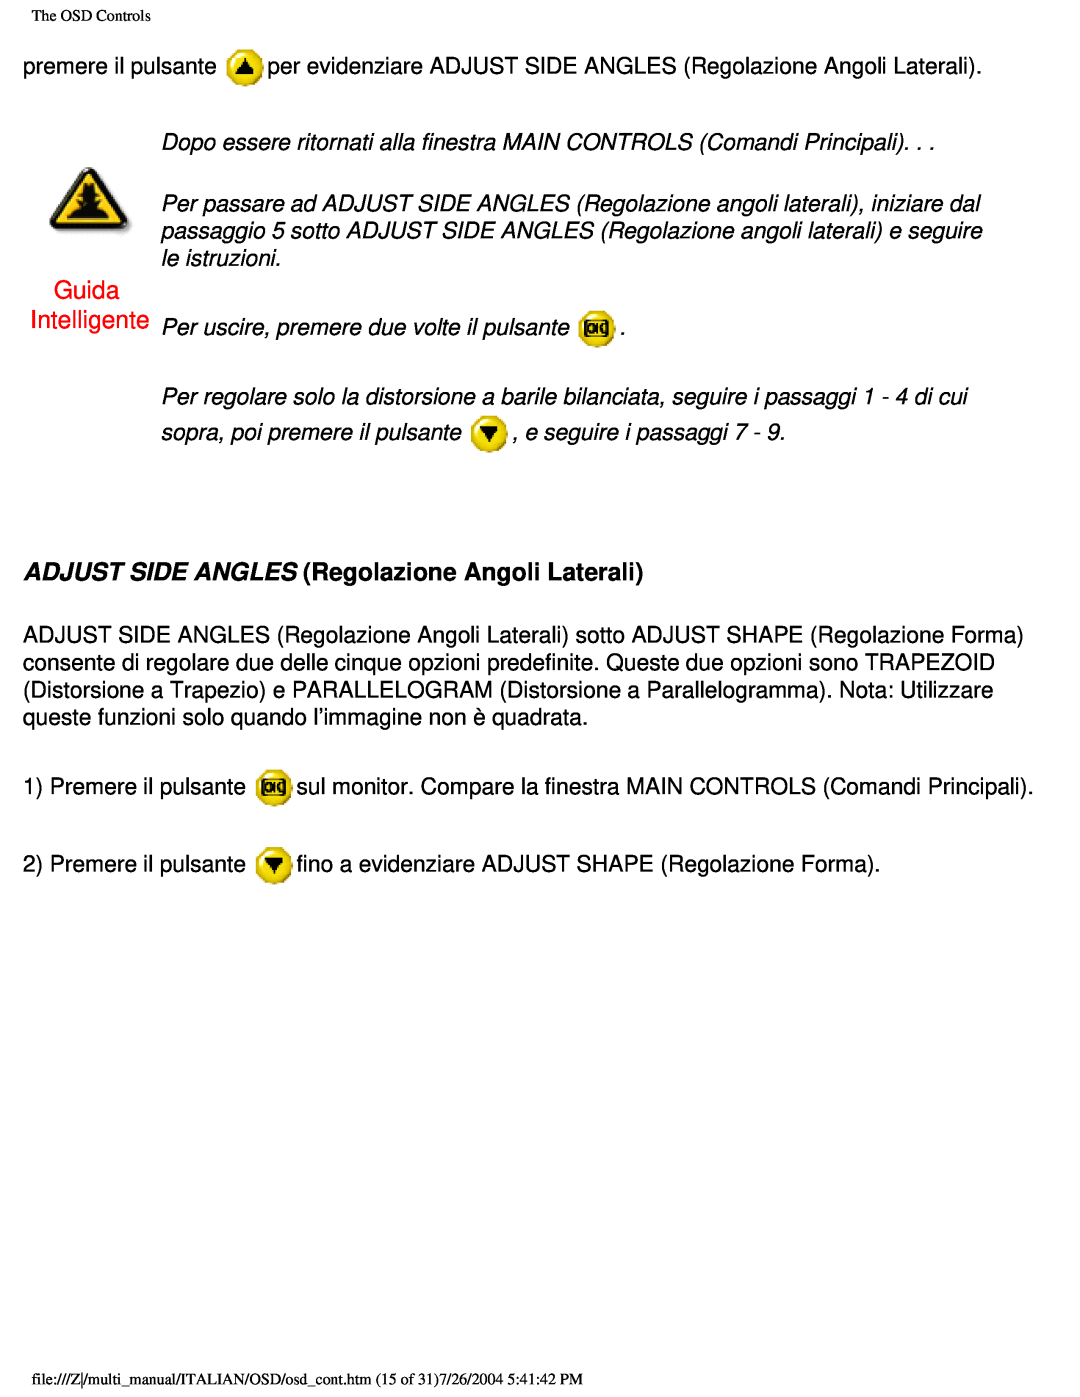 Philips 201B user manual Guida, ADJUST SIDE ANGLES Regolazione Angoli Laterali 